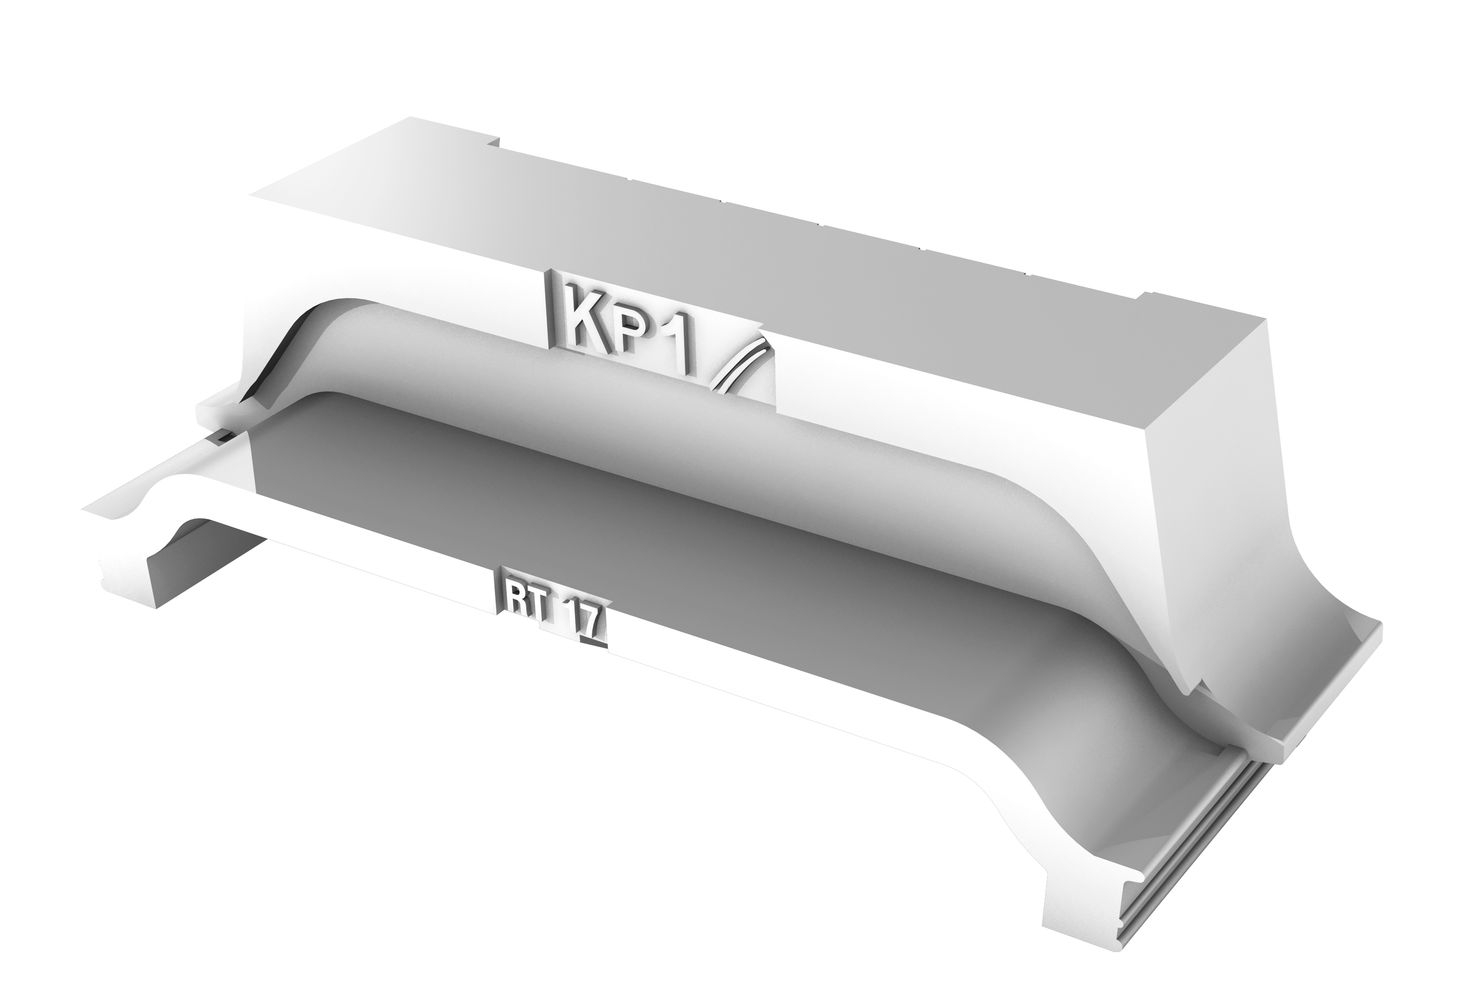 rupteur-thermique-ecorupteur-transversal-db-rt24-0-60m-kp1-0